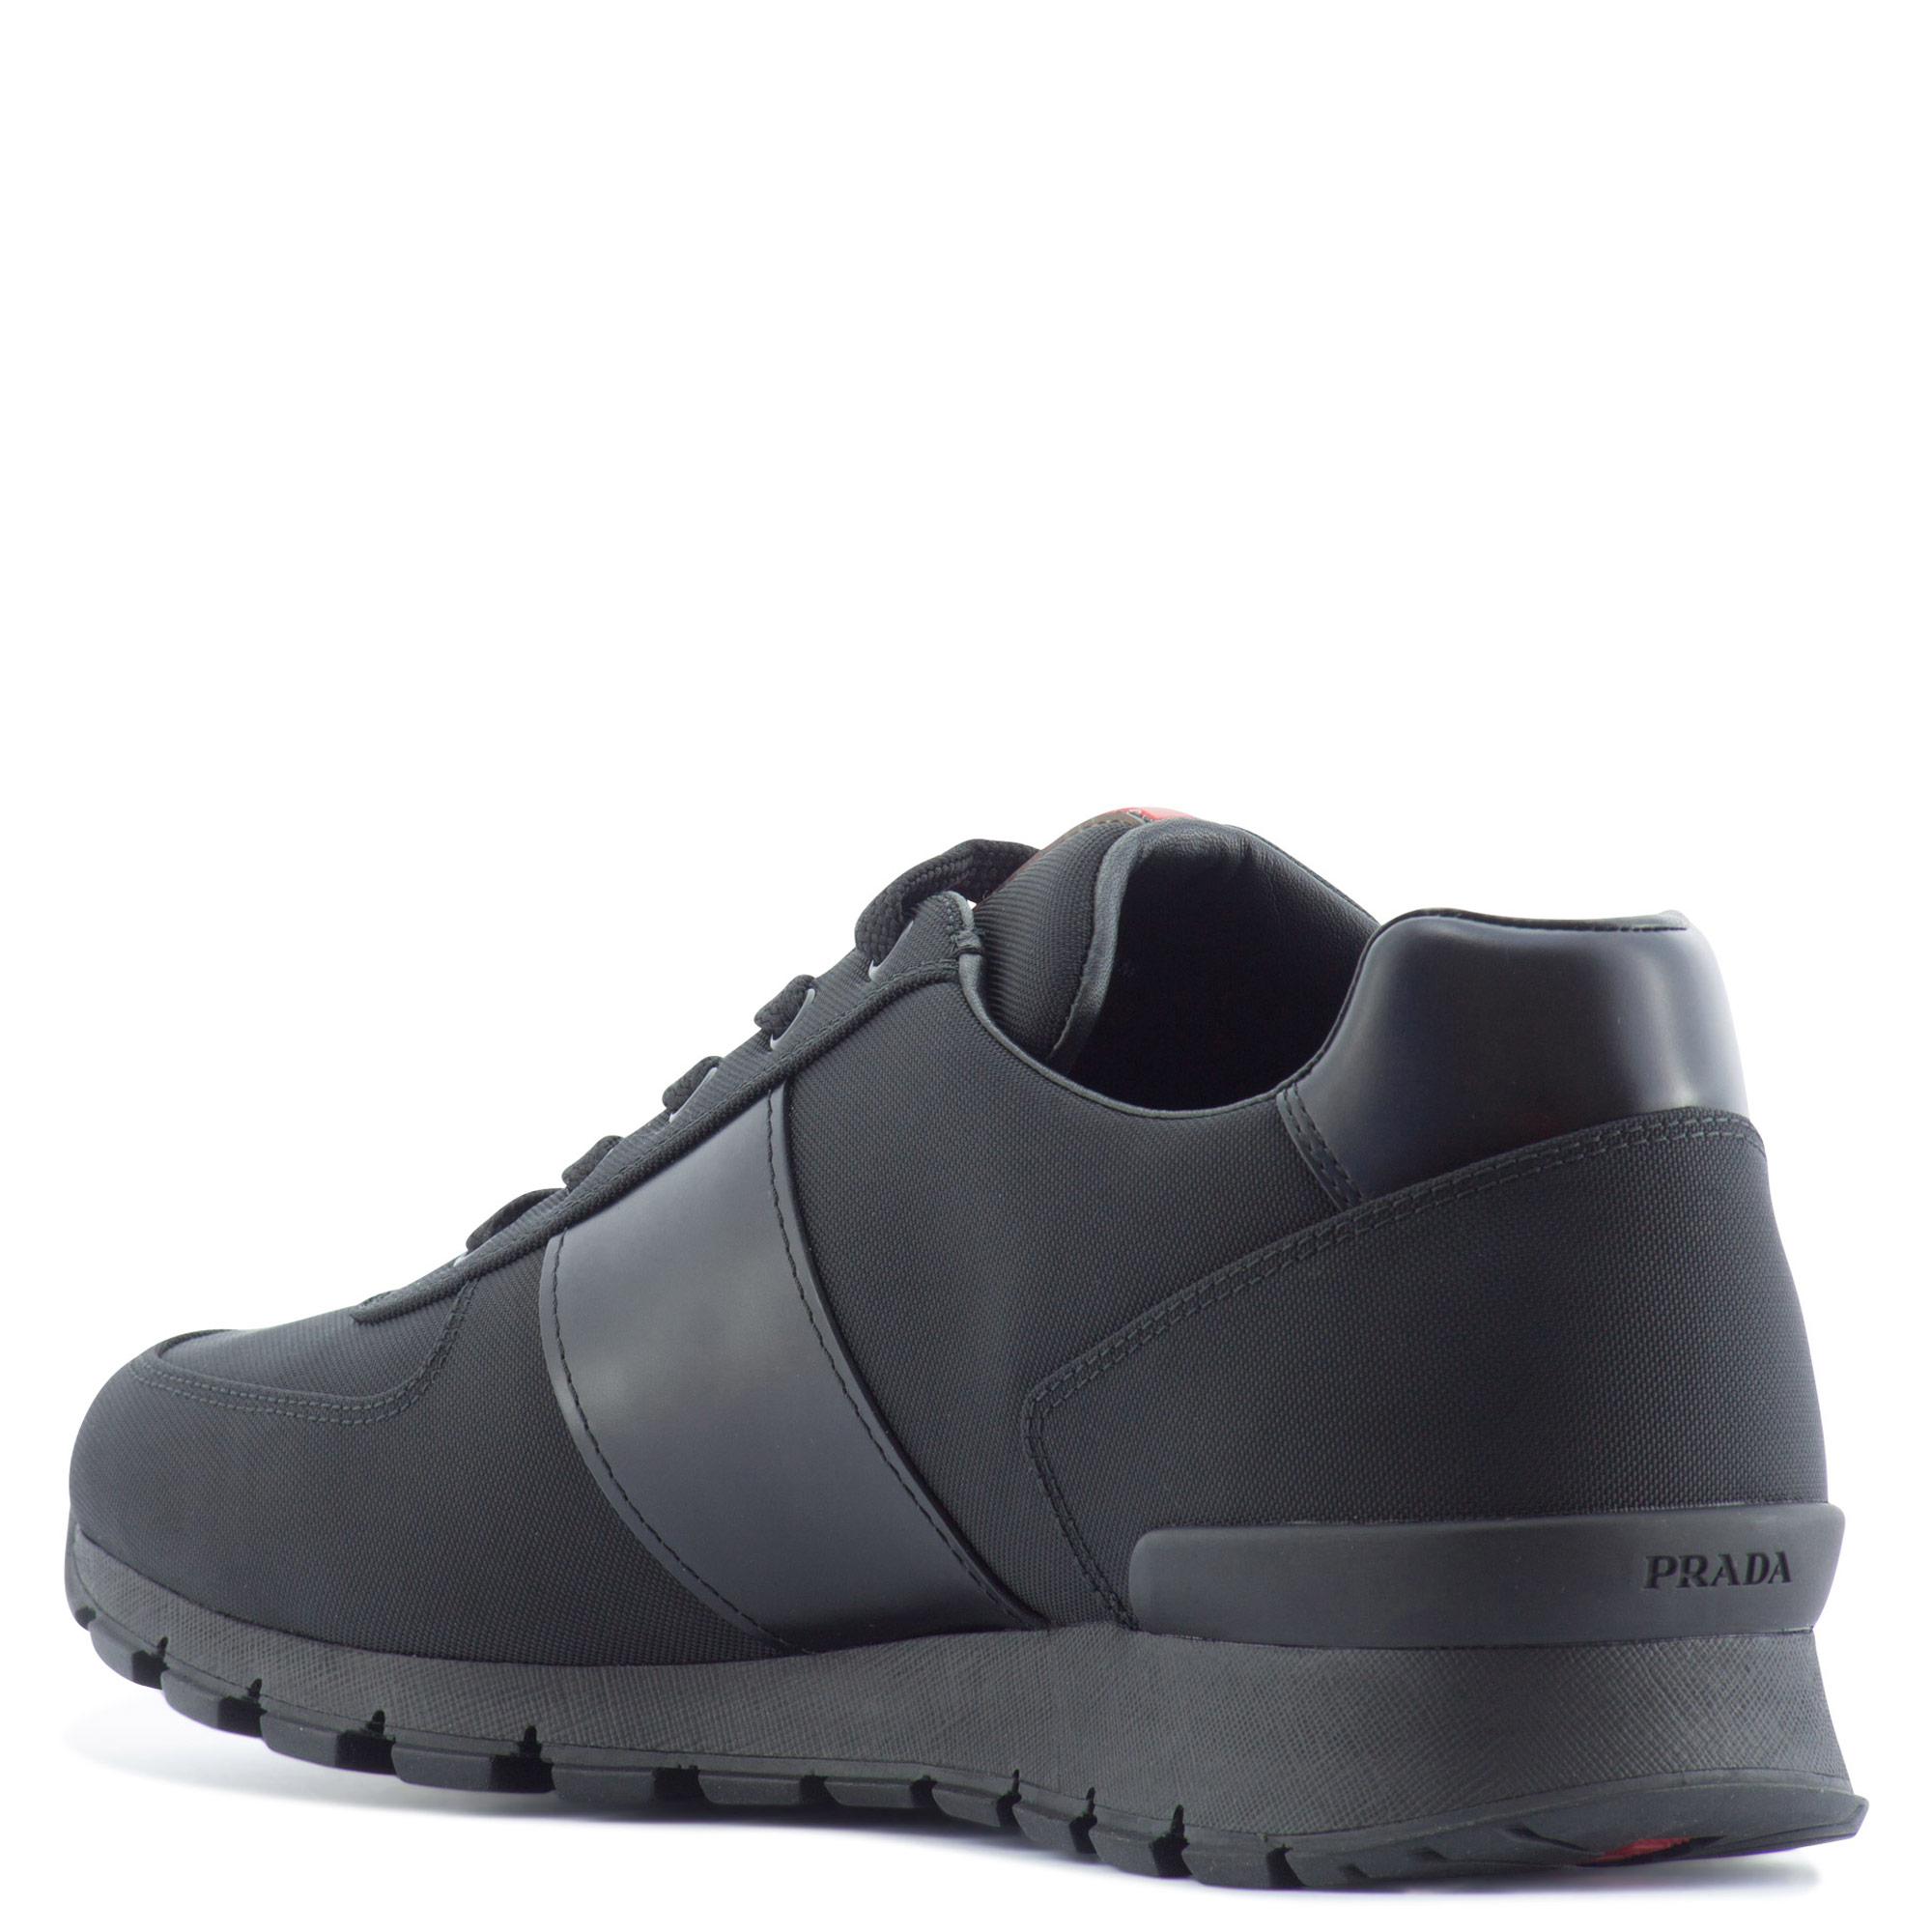 Prada Leather Low-Top Sneakers in Black for Men - Lyst